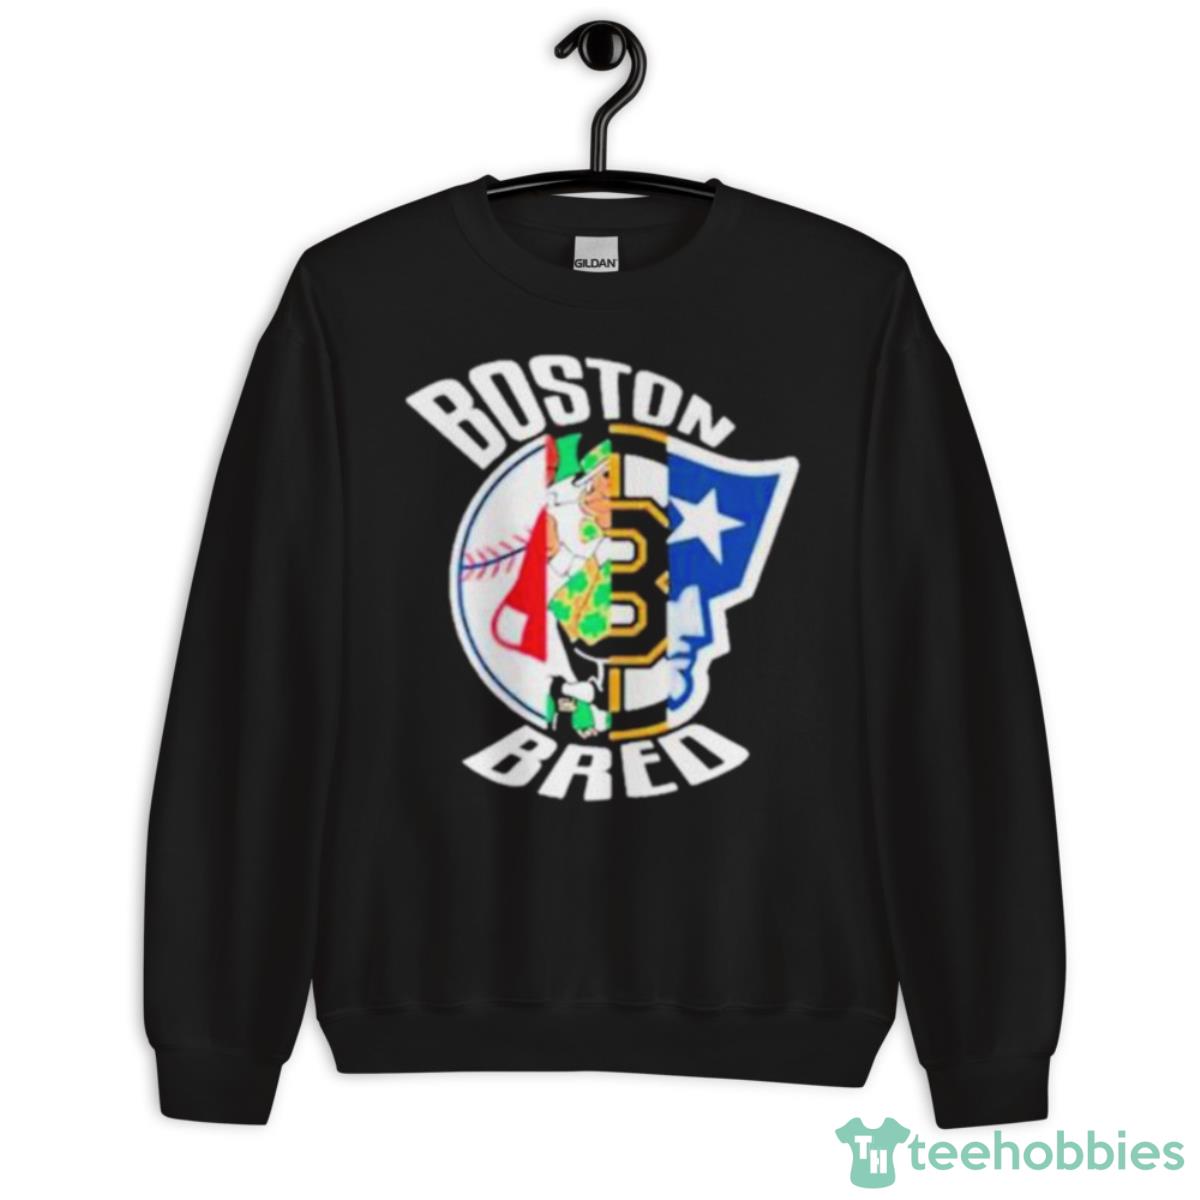 Boston Bruins Celtics Red Sox New England Patriots Boston Bred Shirt - Unisex Crewneck Sweatshirt